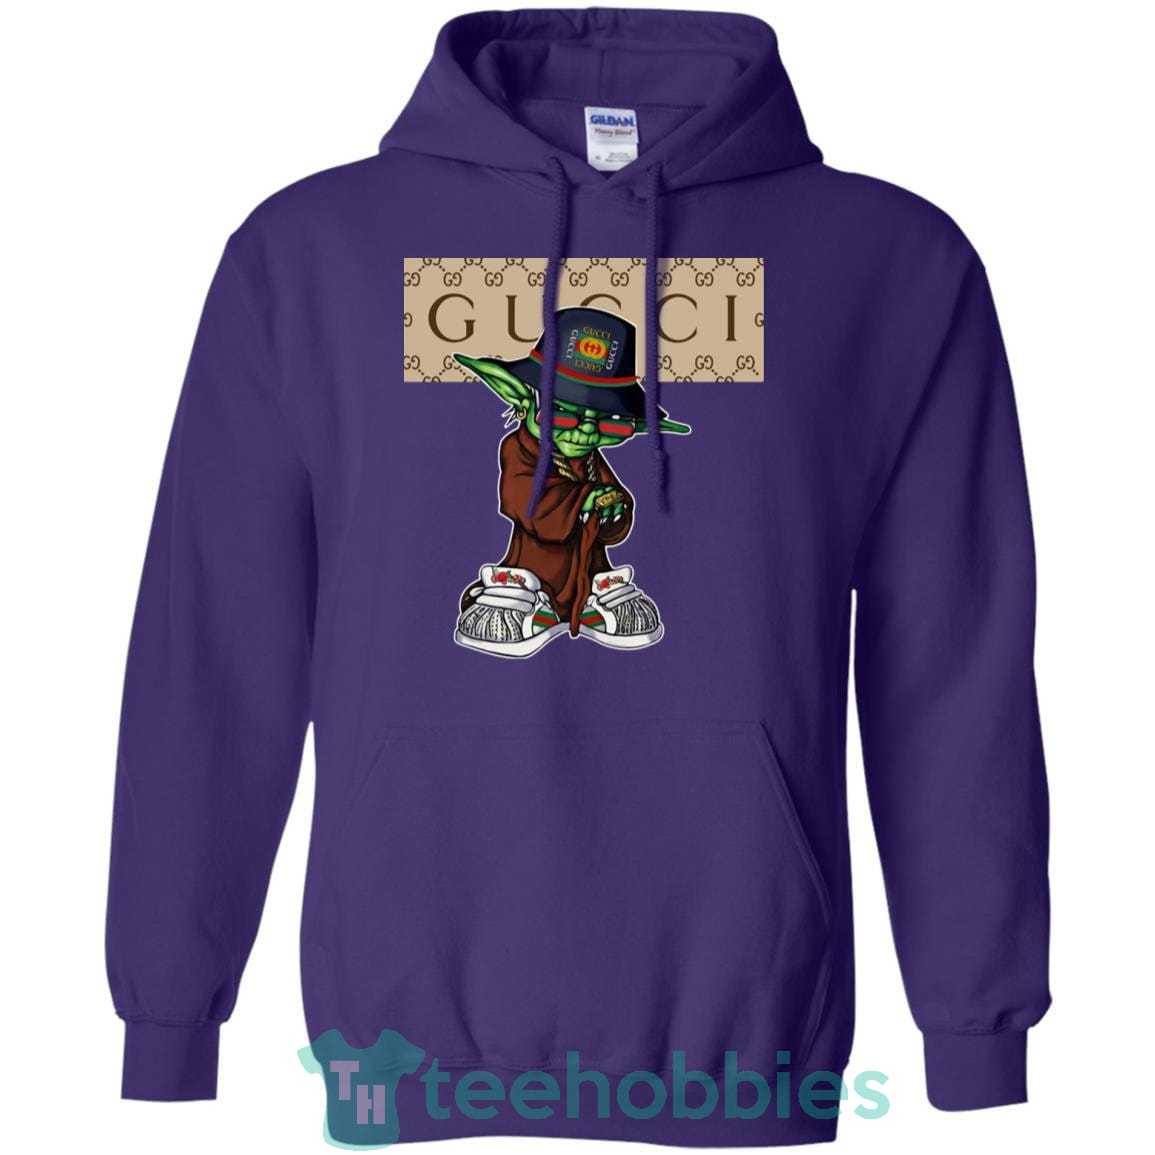 Vacante Recuerdo guardarropa Gucci Baby Yoda Star Wars Fans T-Shirt Hoodie Sweatshirt